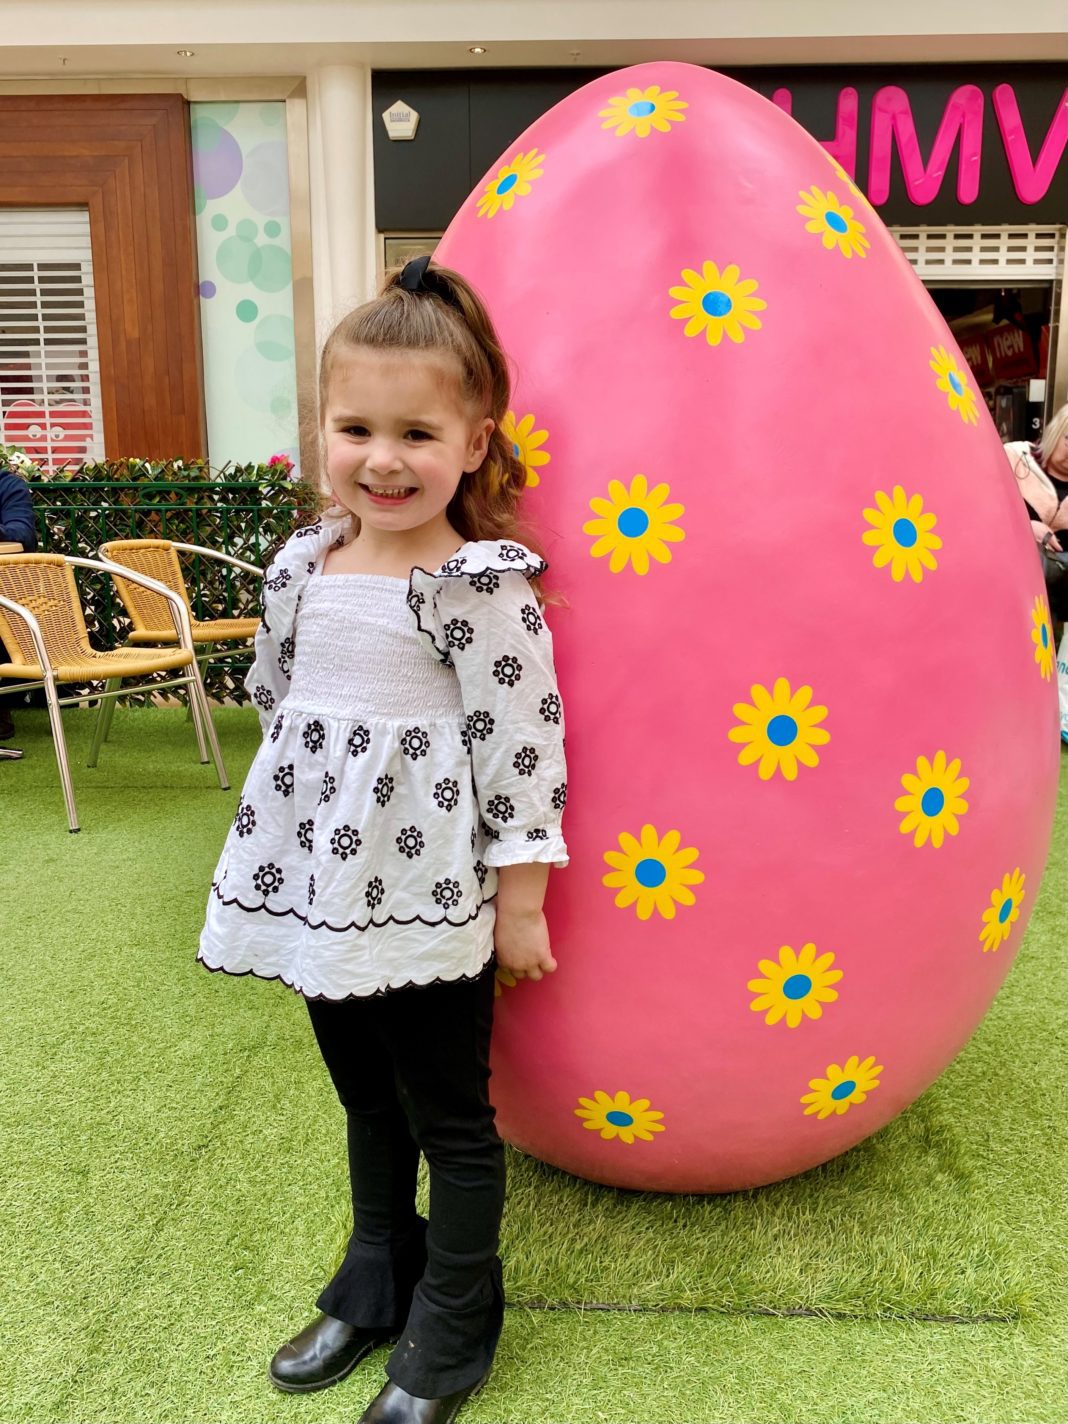 Egg-Cellent Fun in Sunderland's Shopping Centre This Easter